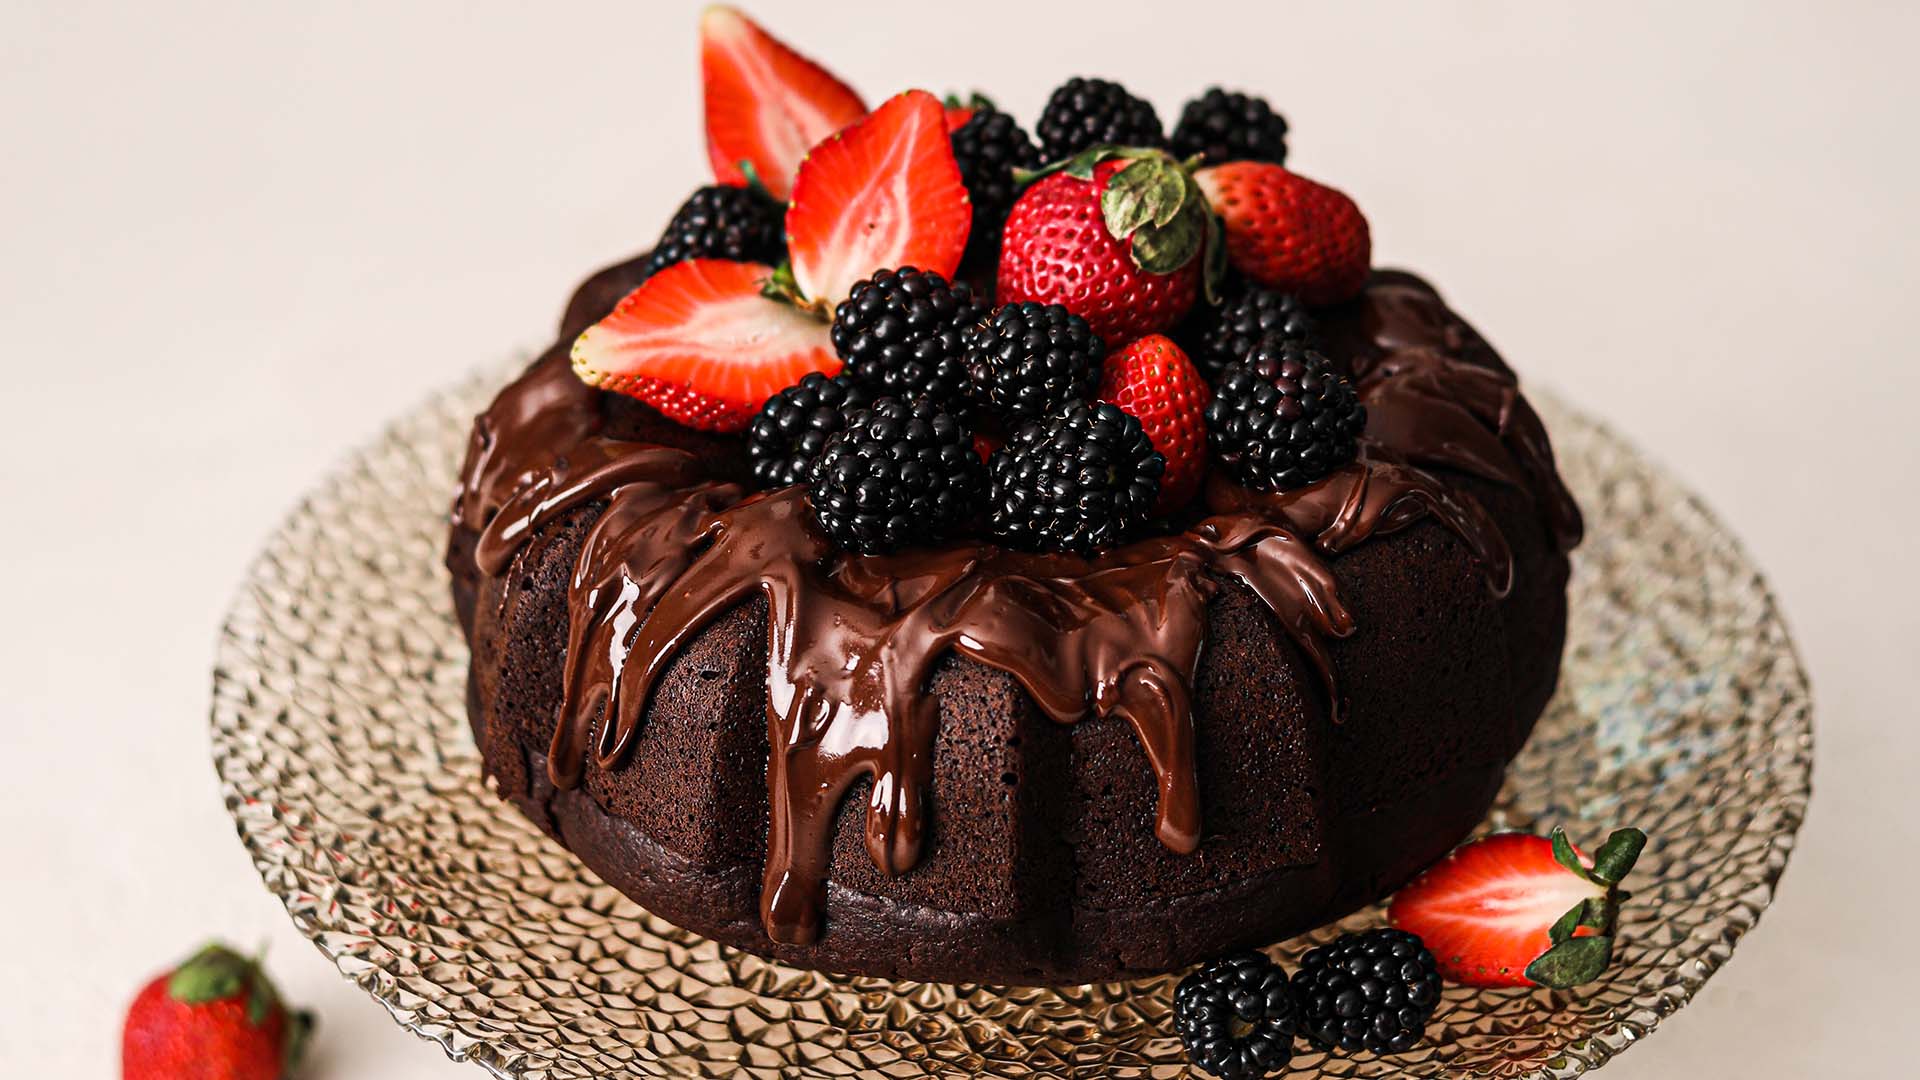 Super moist vegan chocolate cake